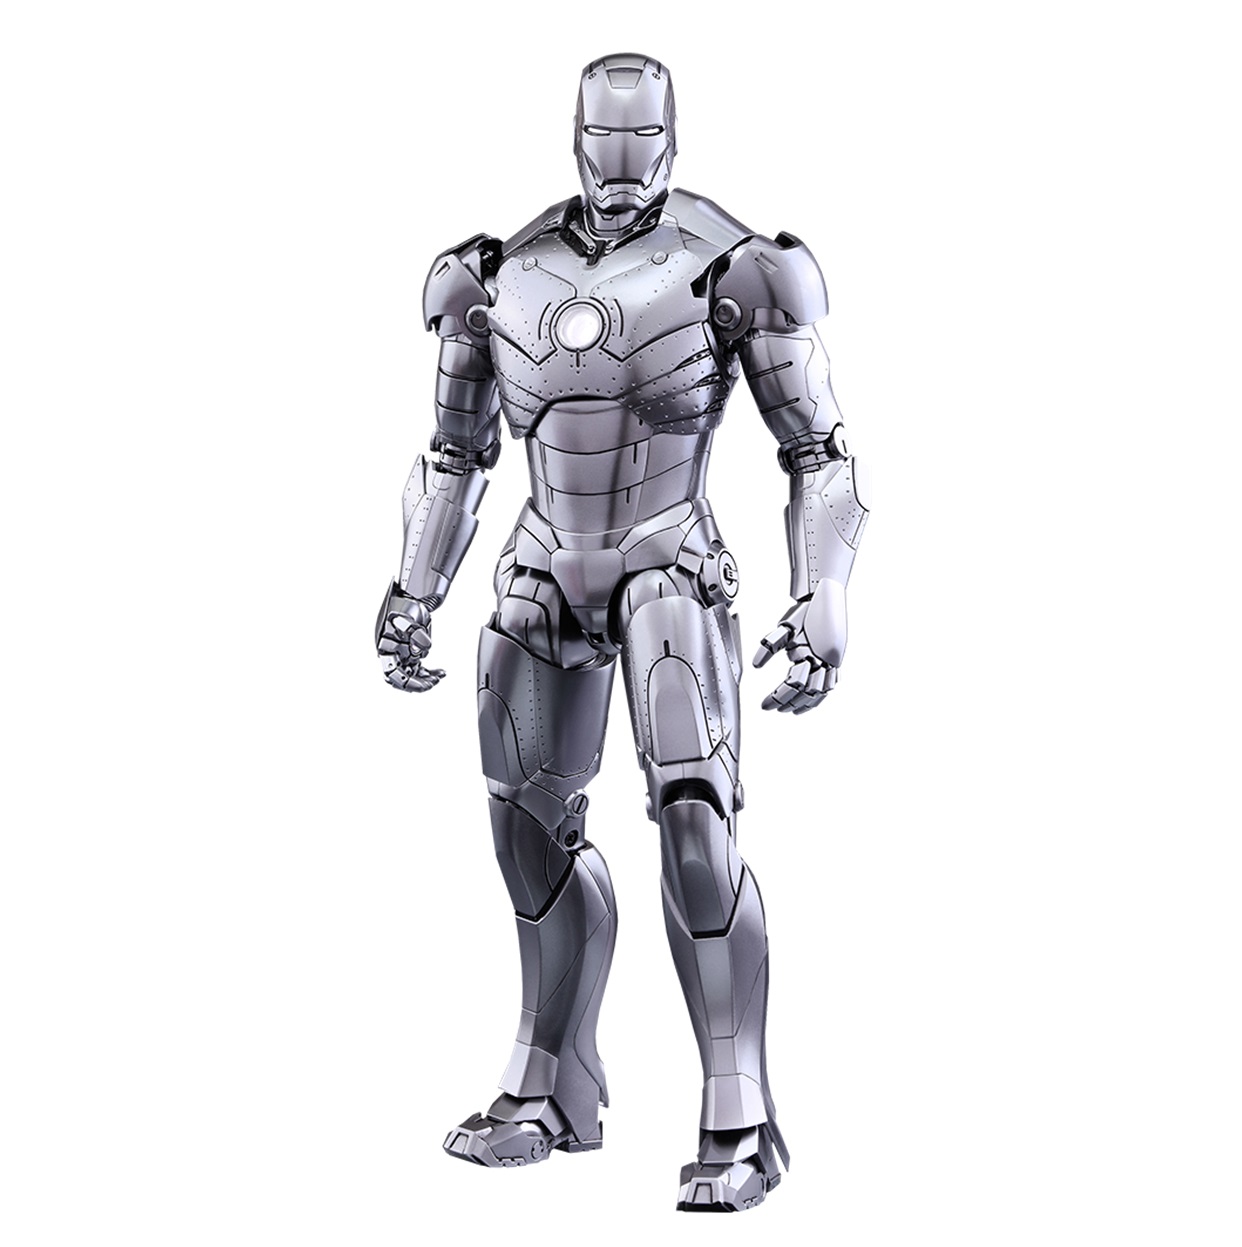 Iron Man Armor Mark Il + Iron Man 3 Mark Ill Zd Toys 6 PuLG